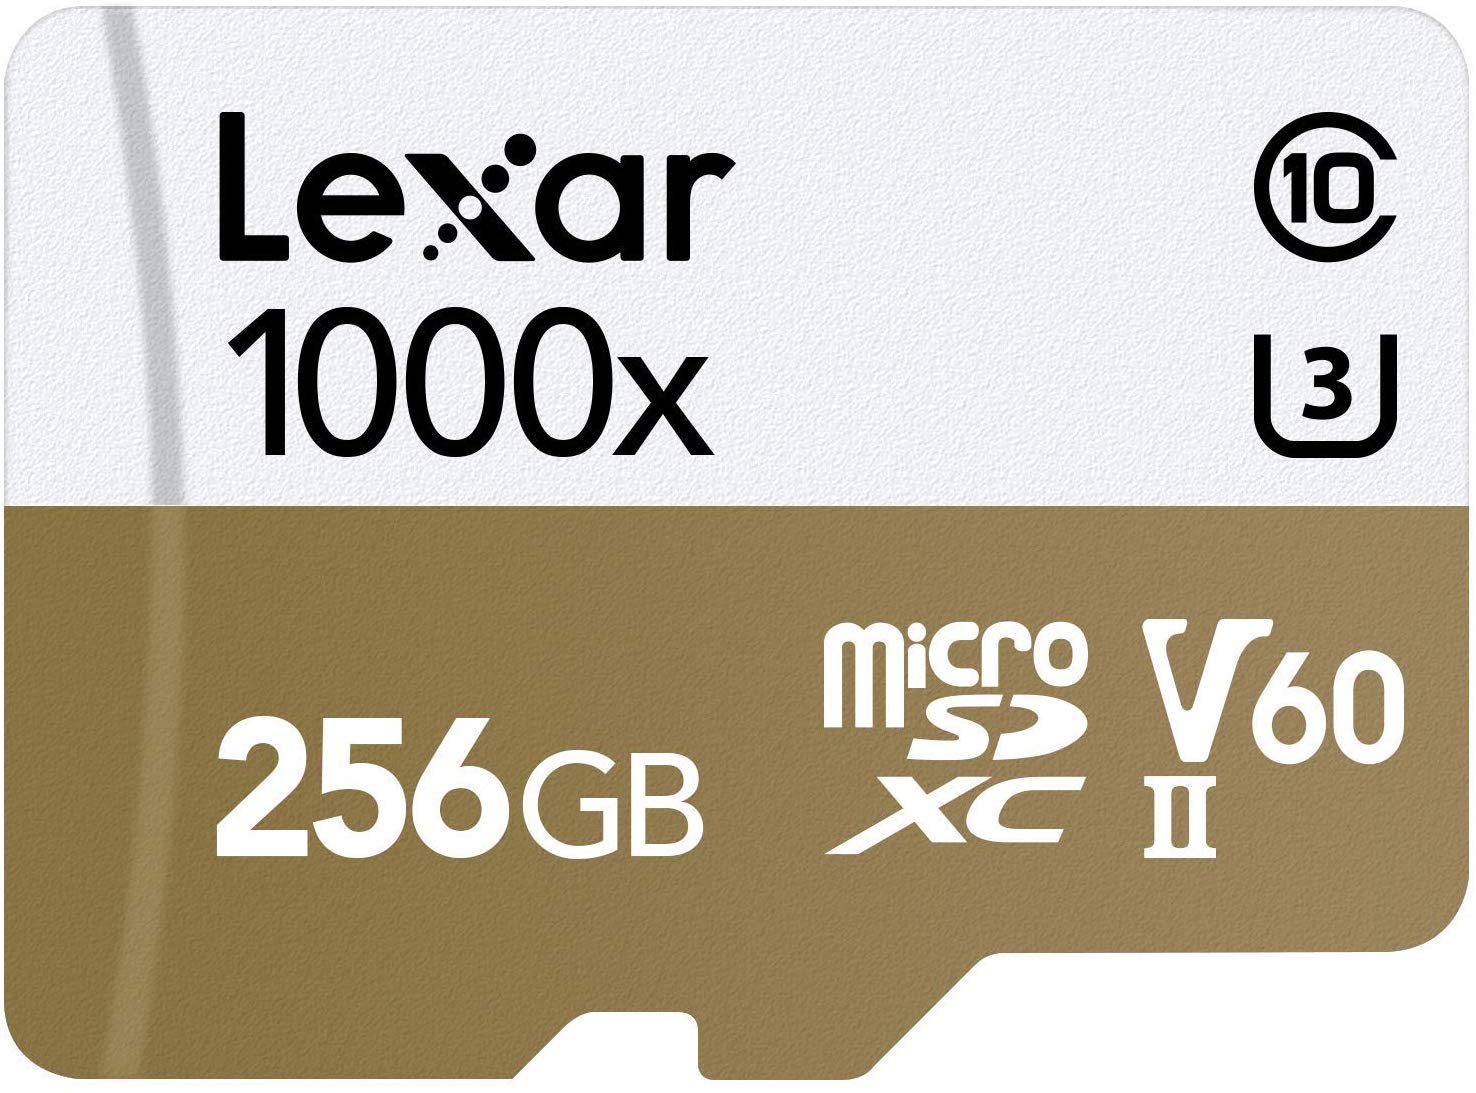 Lexar Professional 1000x 256GB microSDXC UHS-II Card (LSDMI256CBNA1000A)